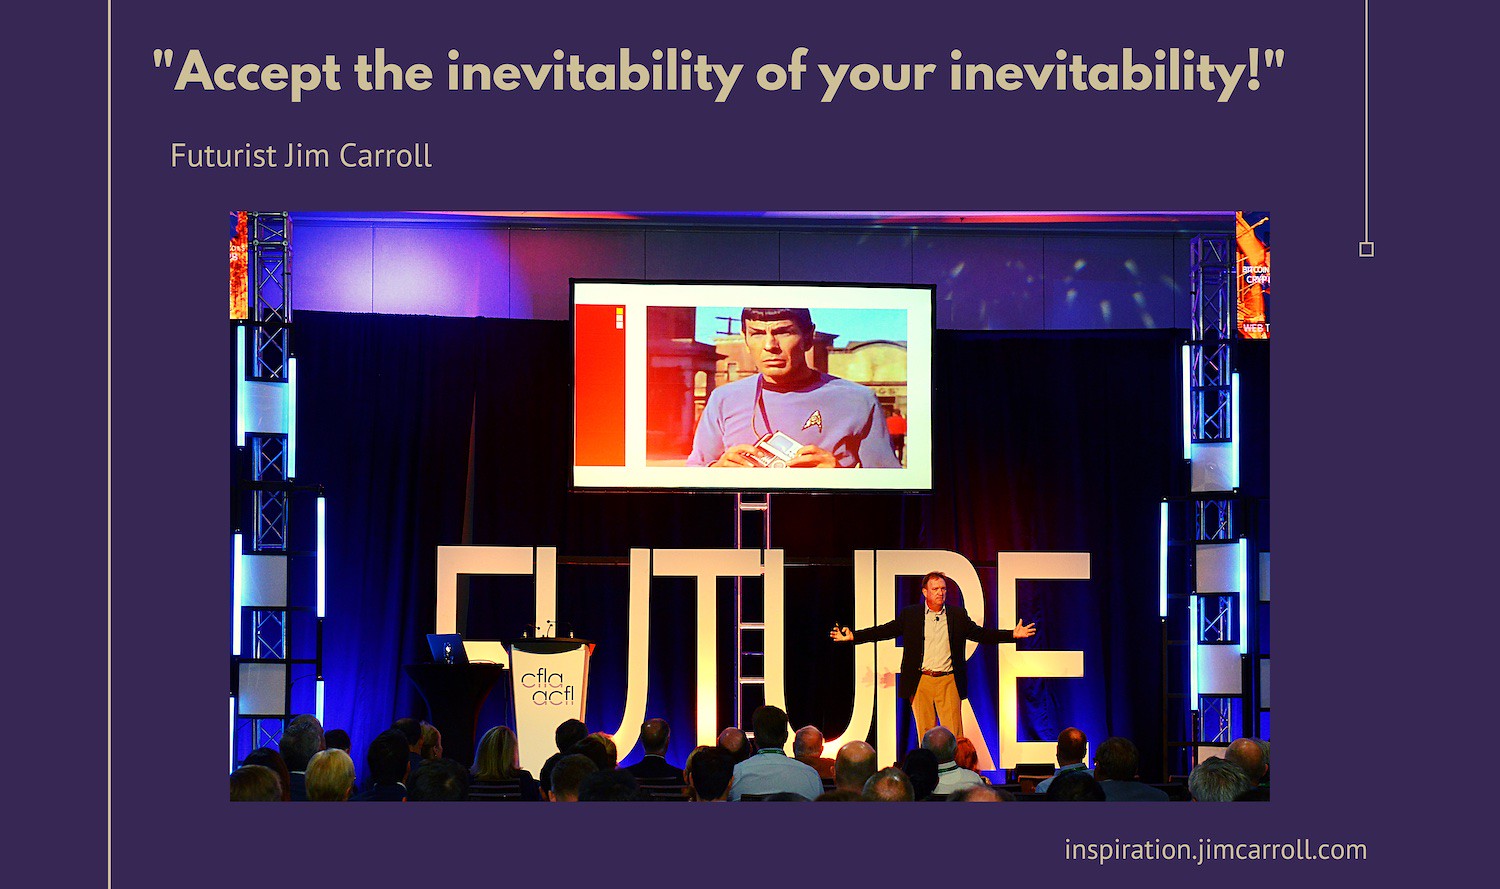 Ac"Accept the inevitability of your inevitability!" - Futurist Jim Carroll